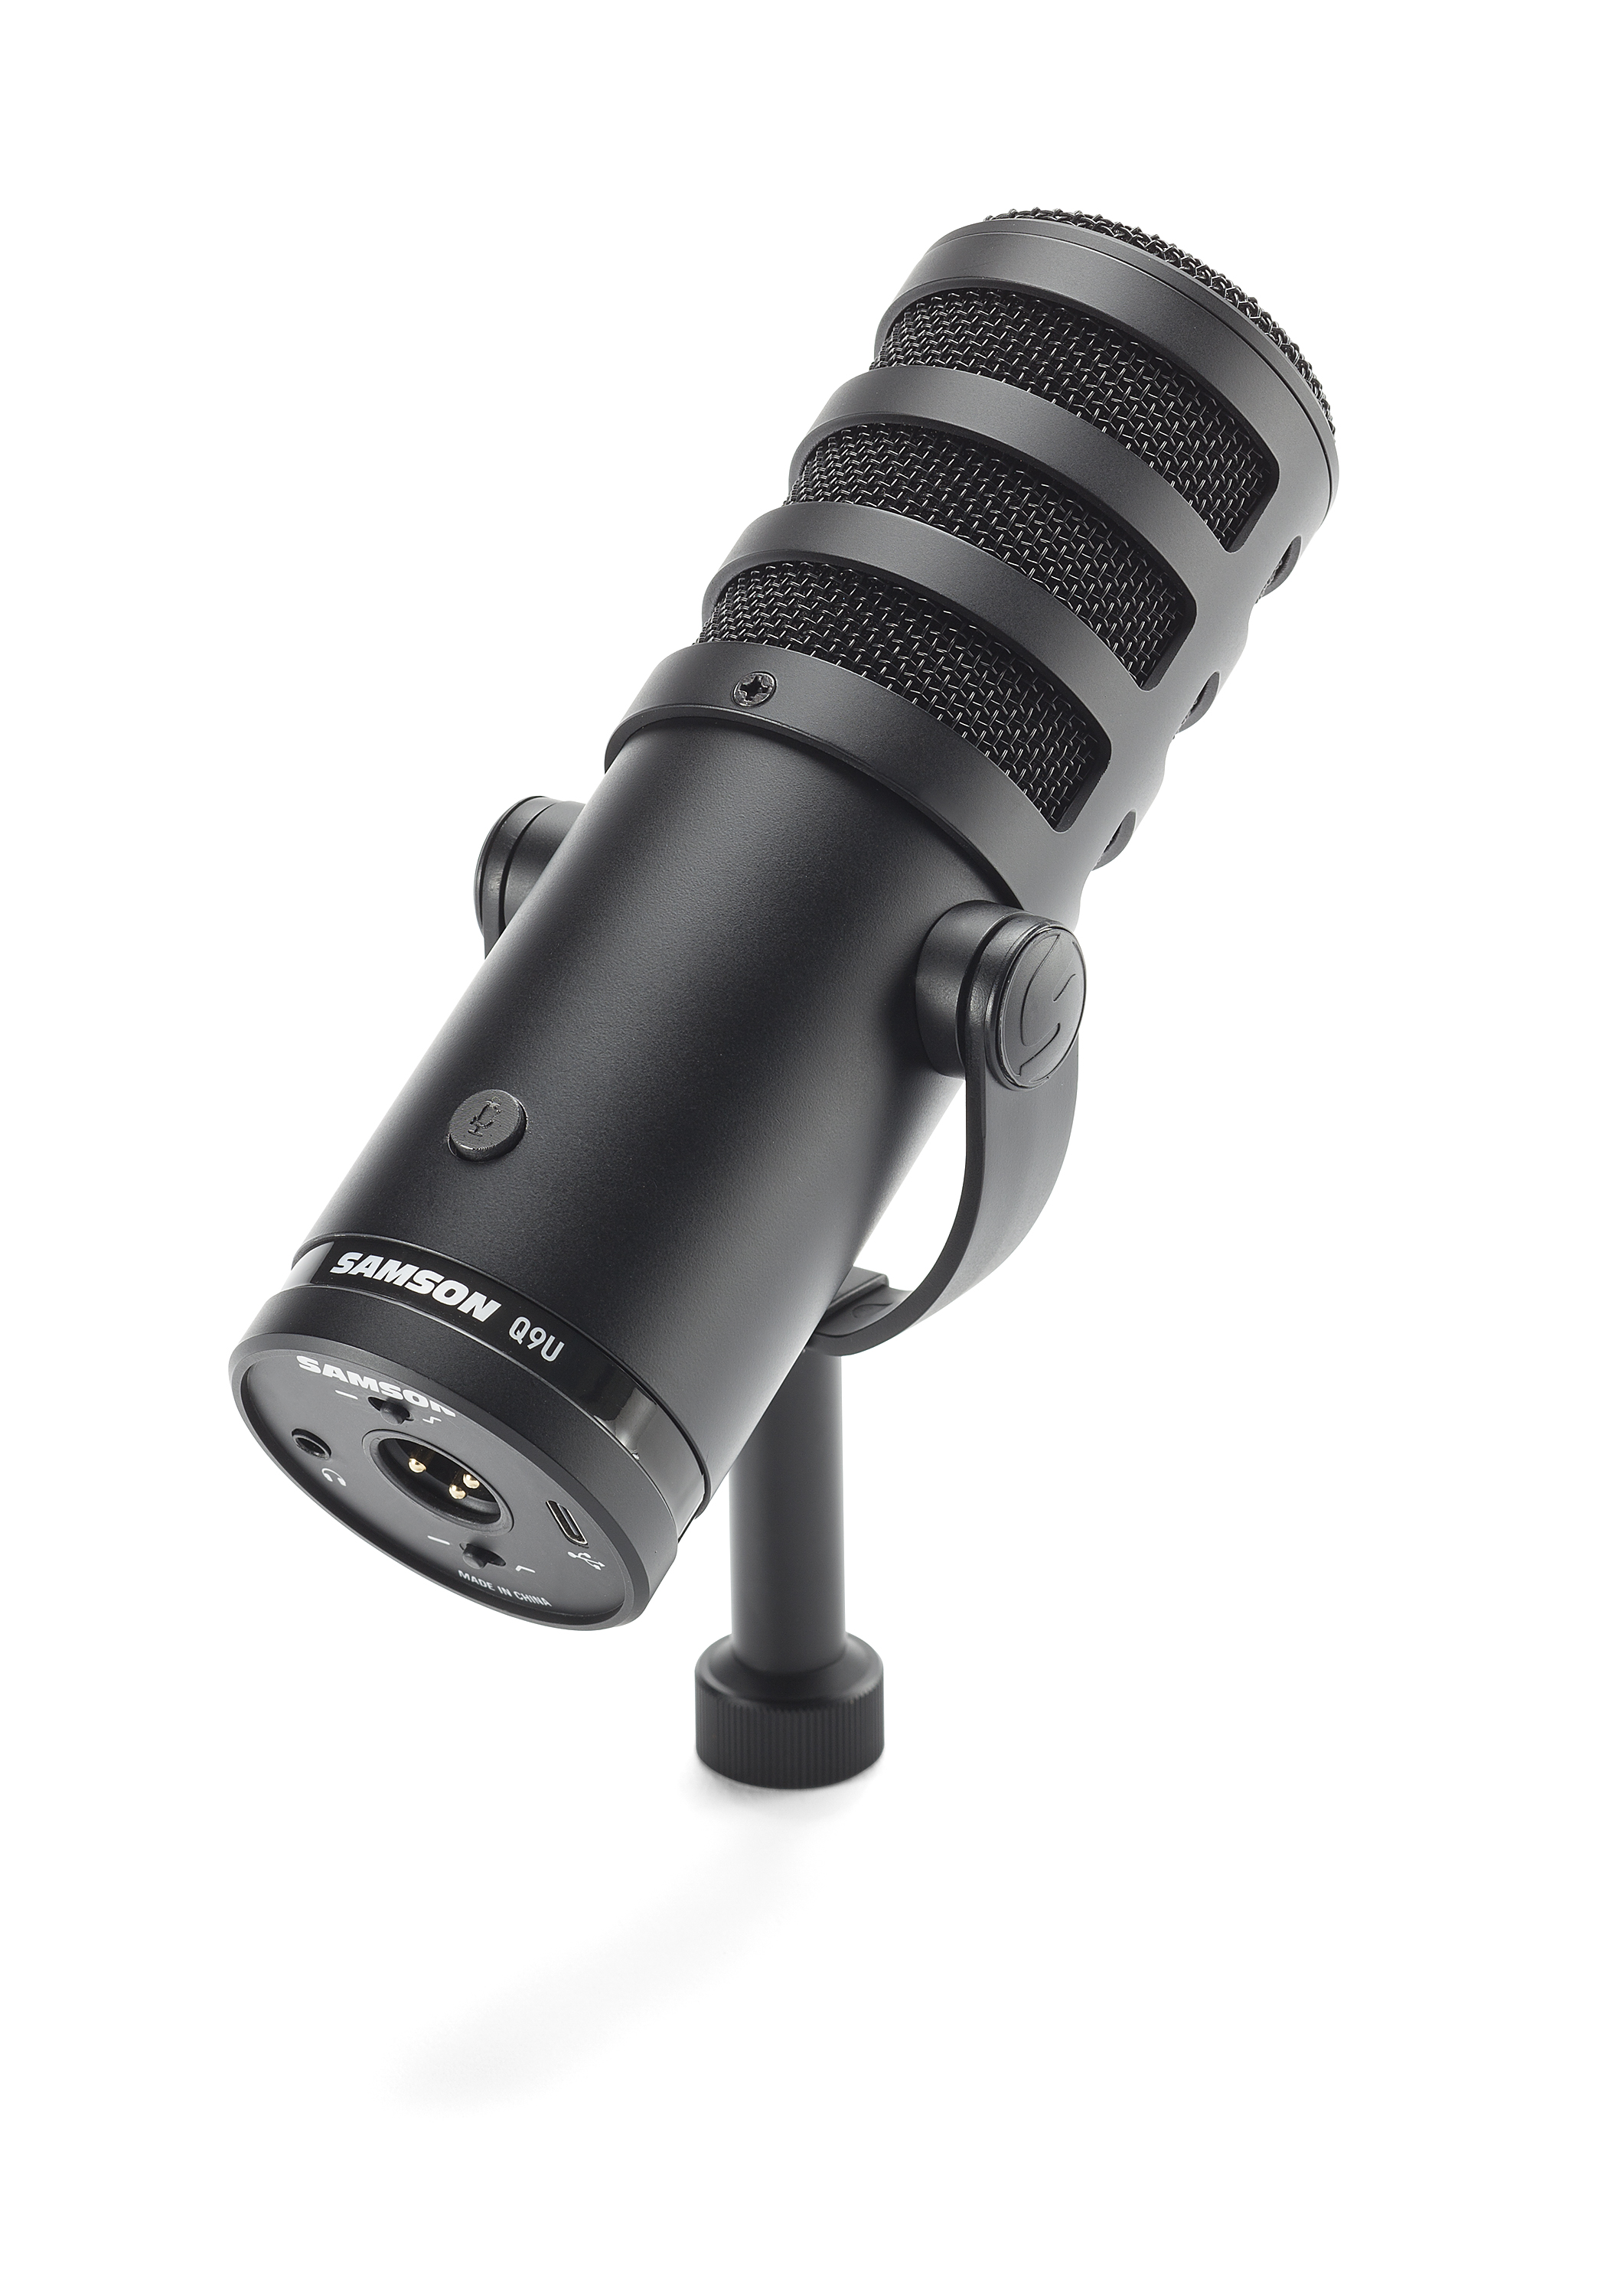 Samson launches Q9U dynamic hybrid studio microphone at CES 6